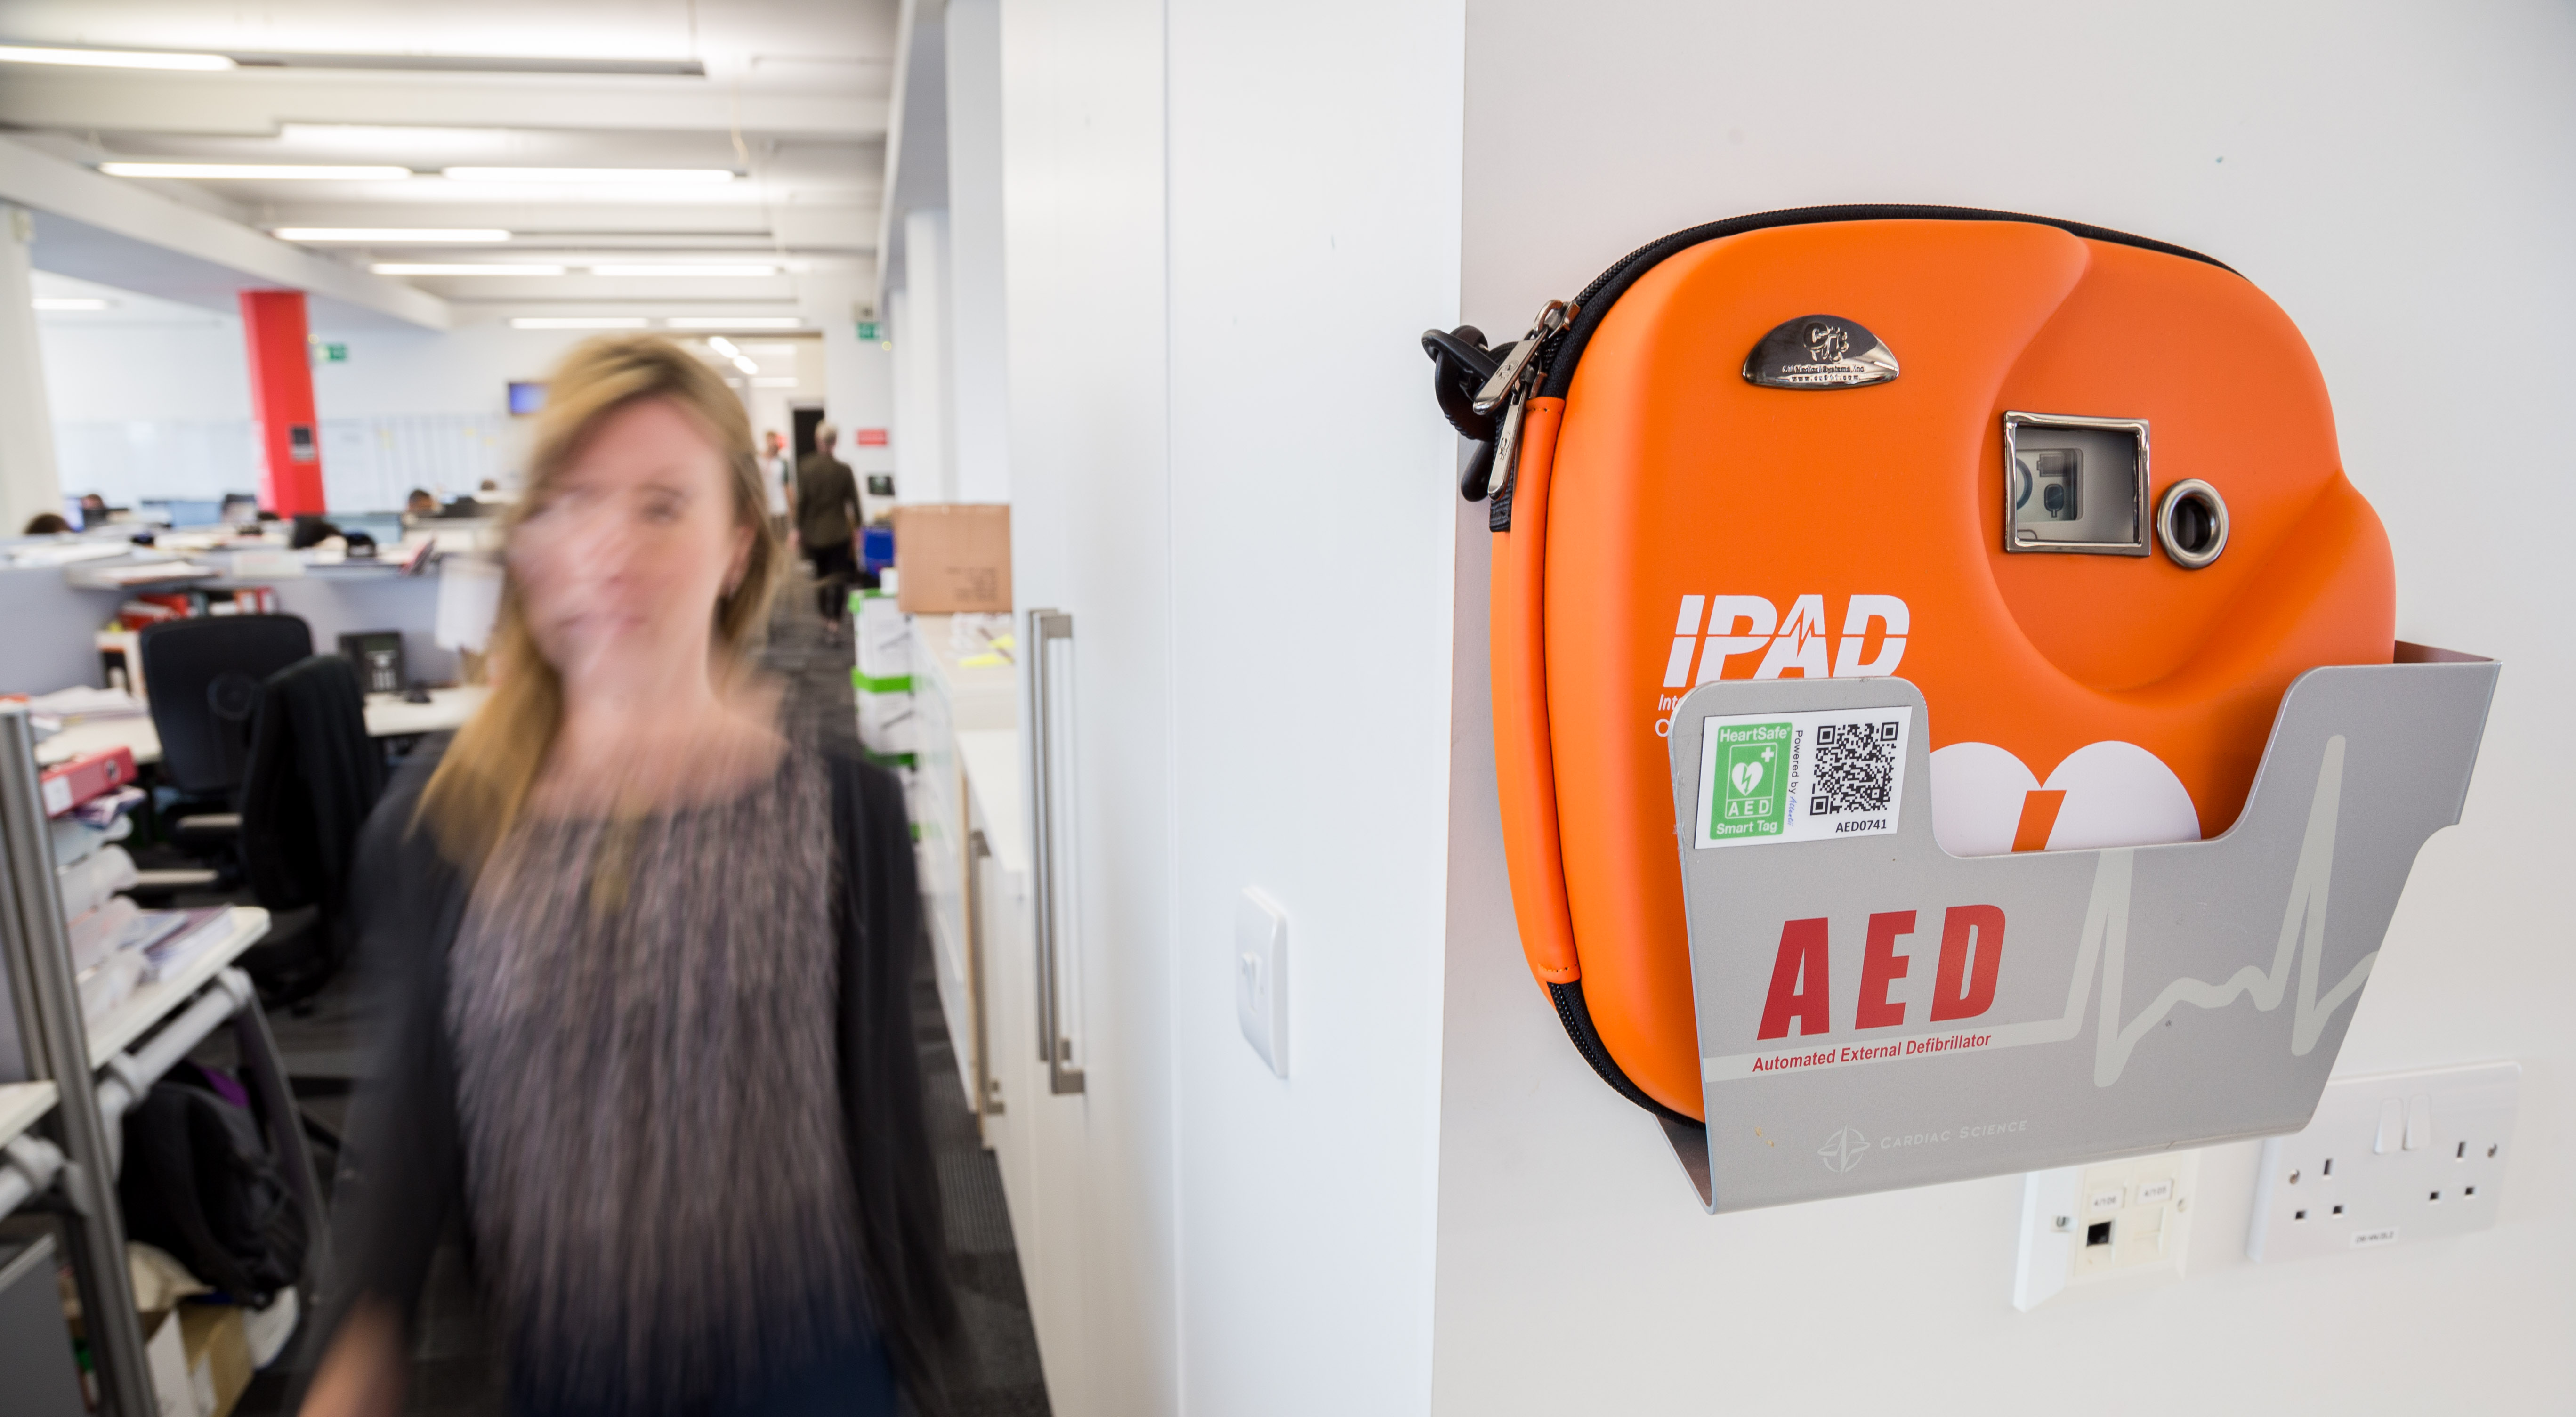 A woman walks past a defibrillator on a wall